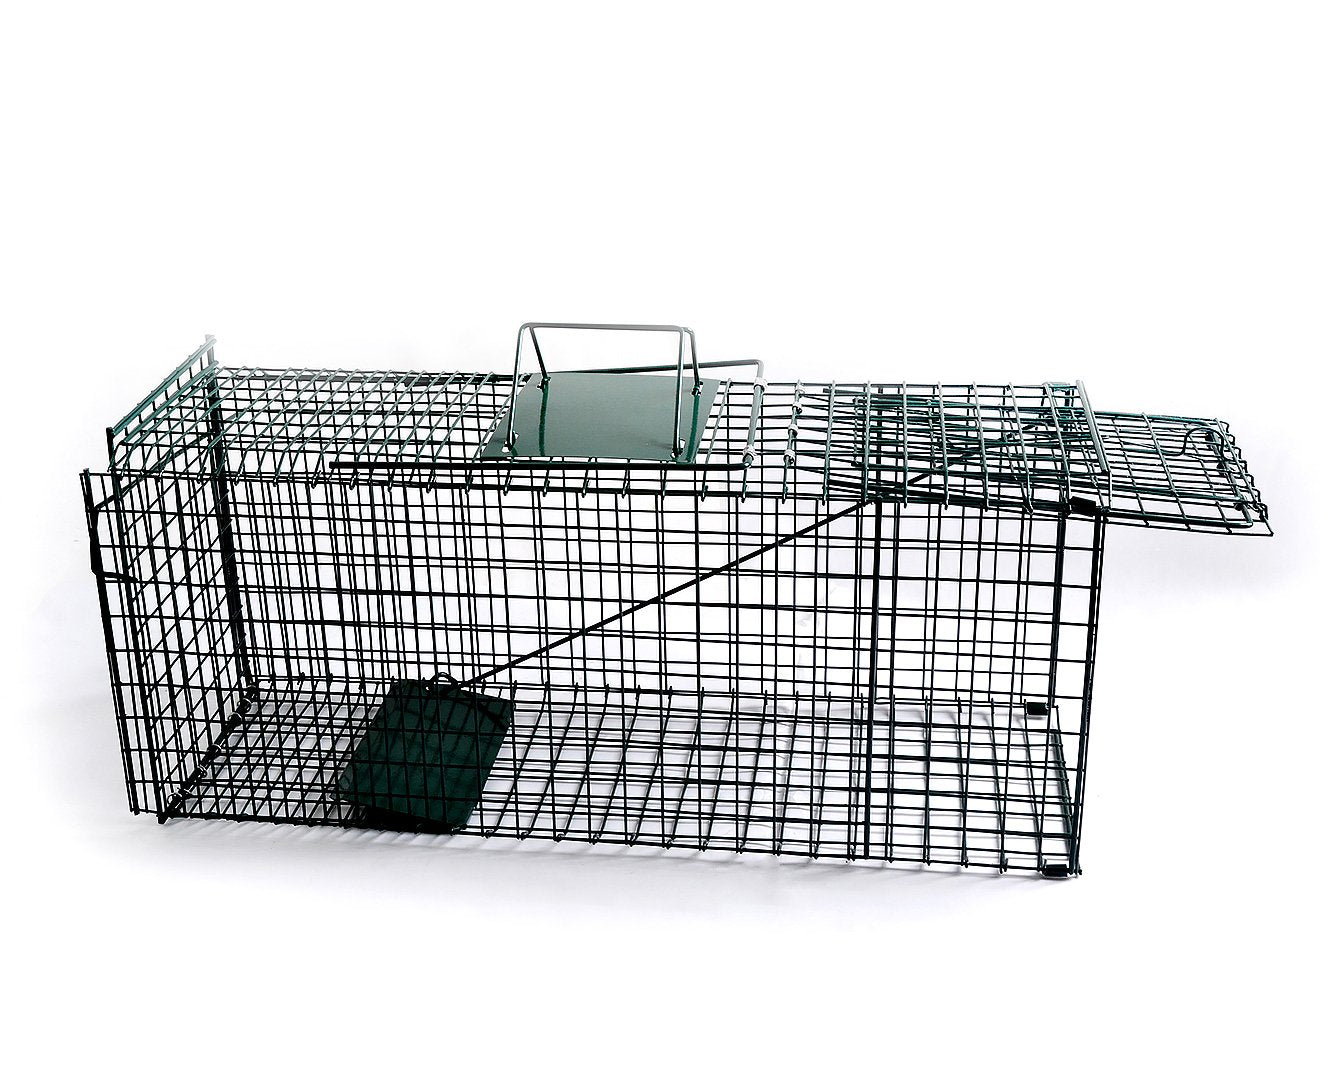 Humane Live Animal Trap Possum Rat Rabbit Hare Catcher Folding Cage